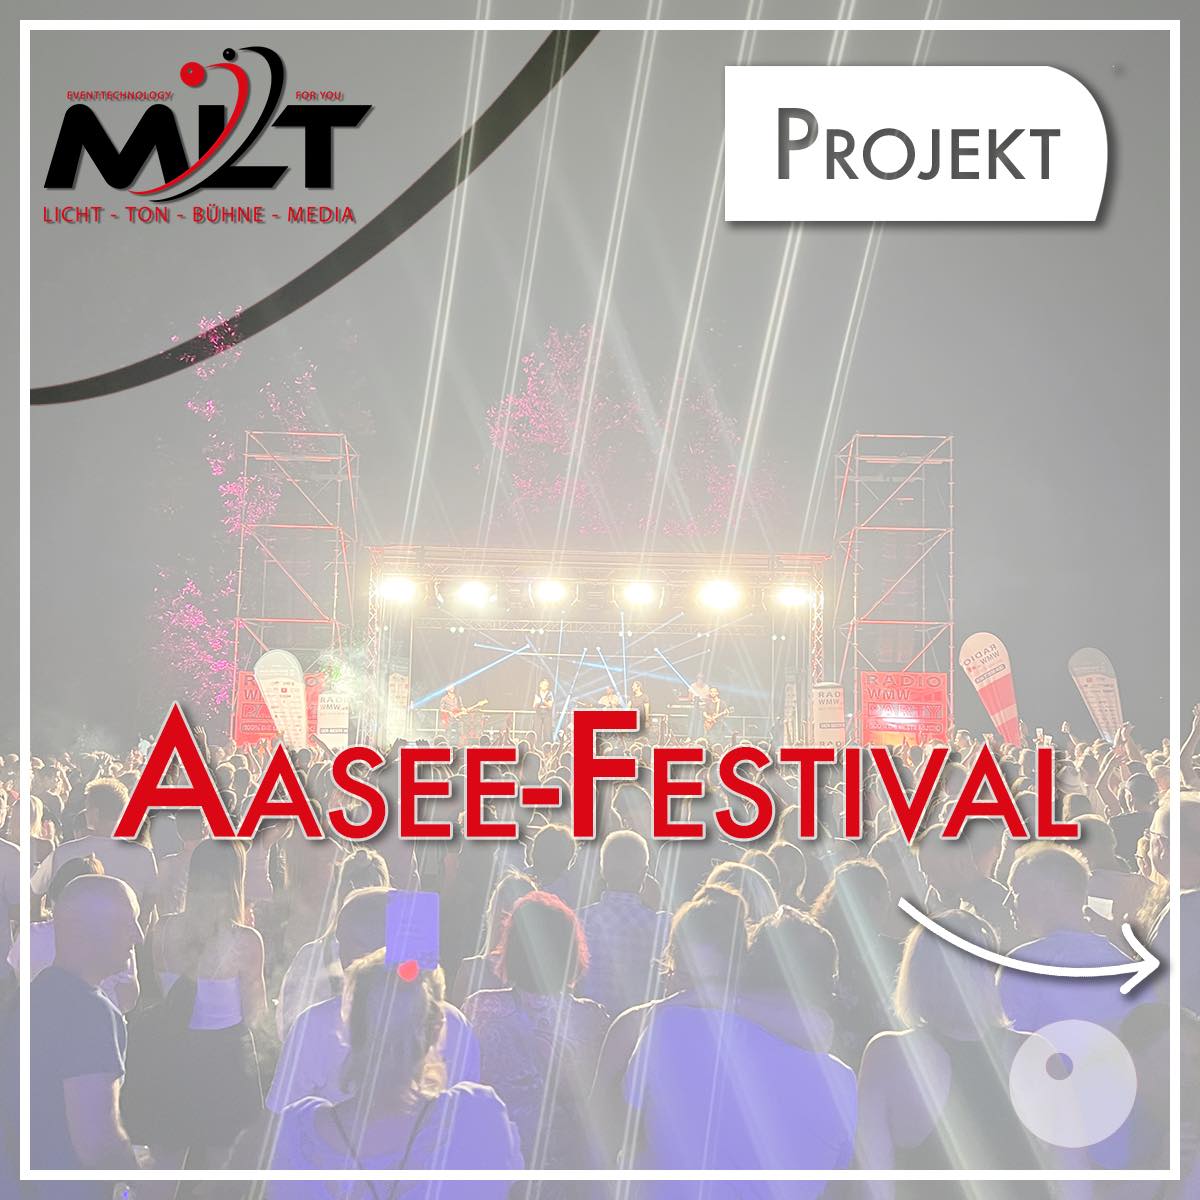 Aasee Festival Bocholt 800 MLT Veranstaltungstechnik